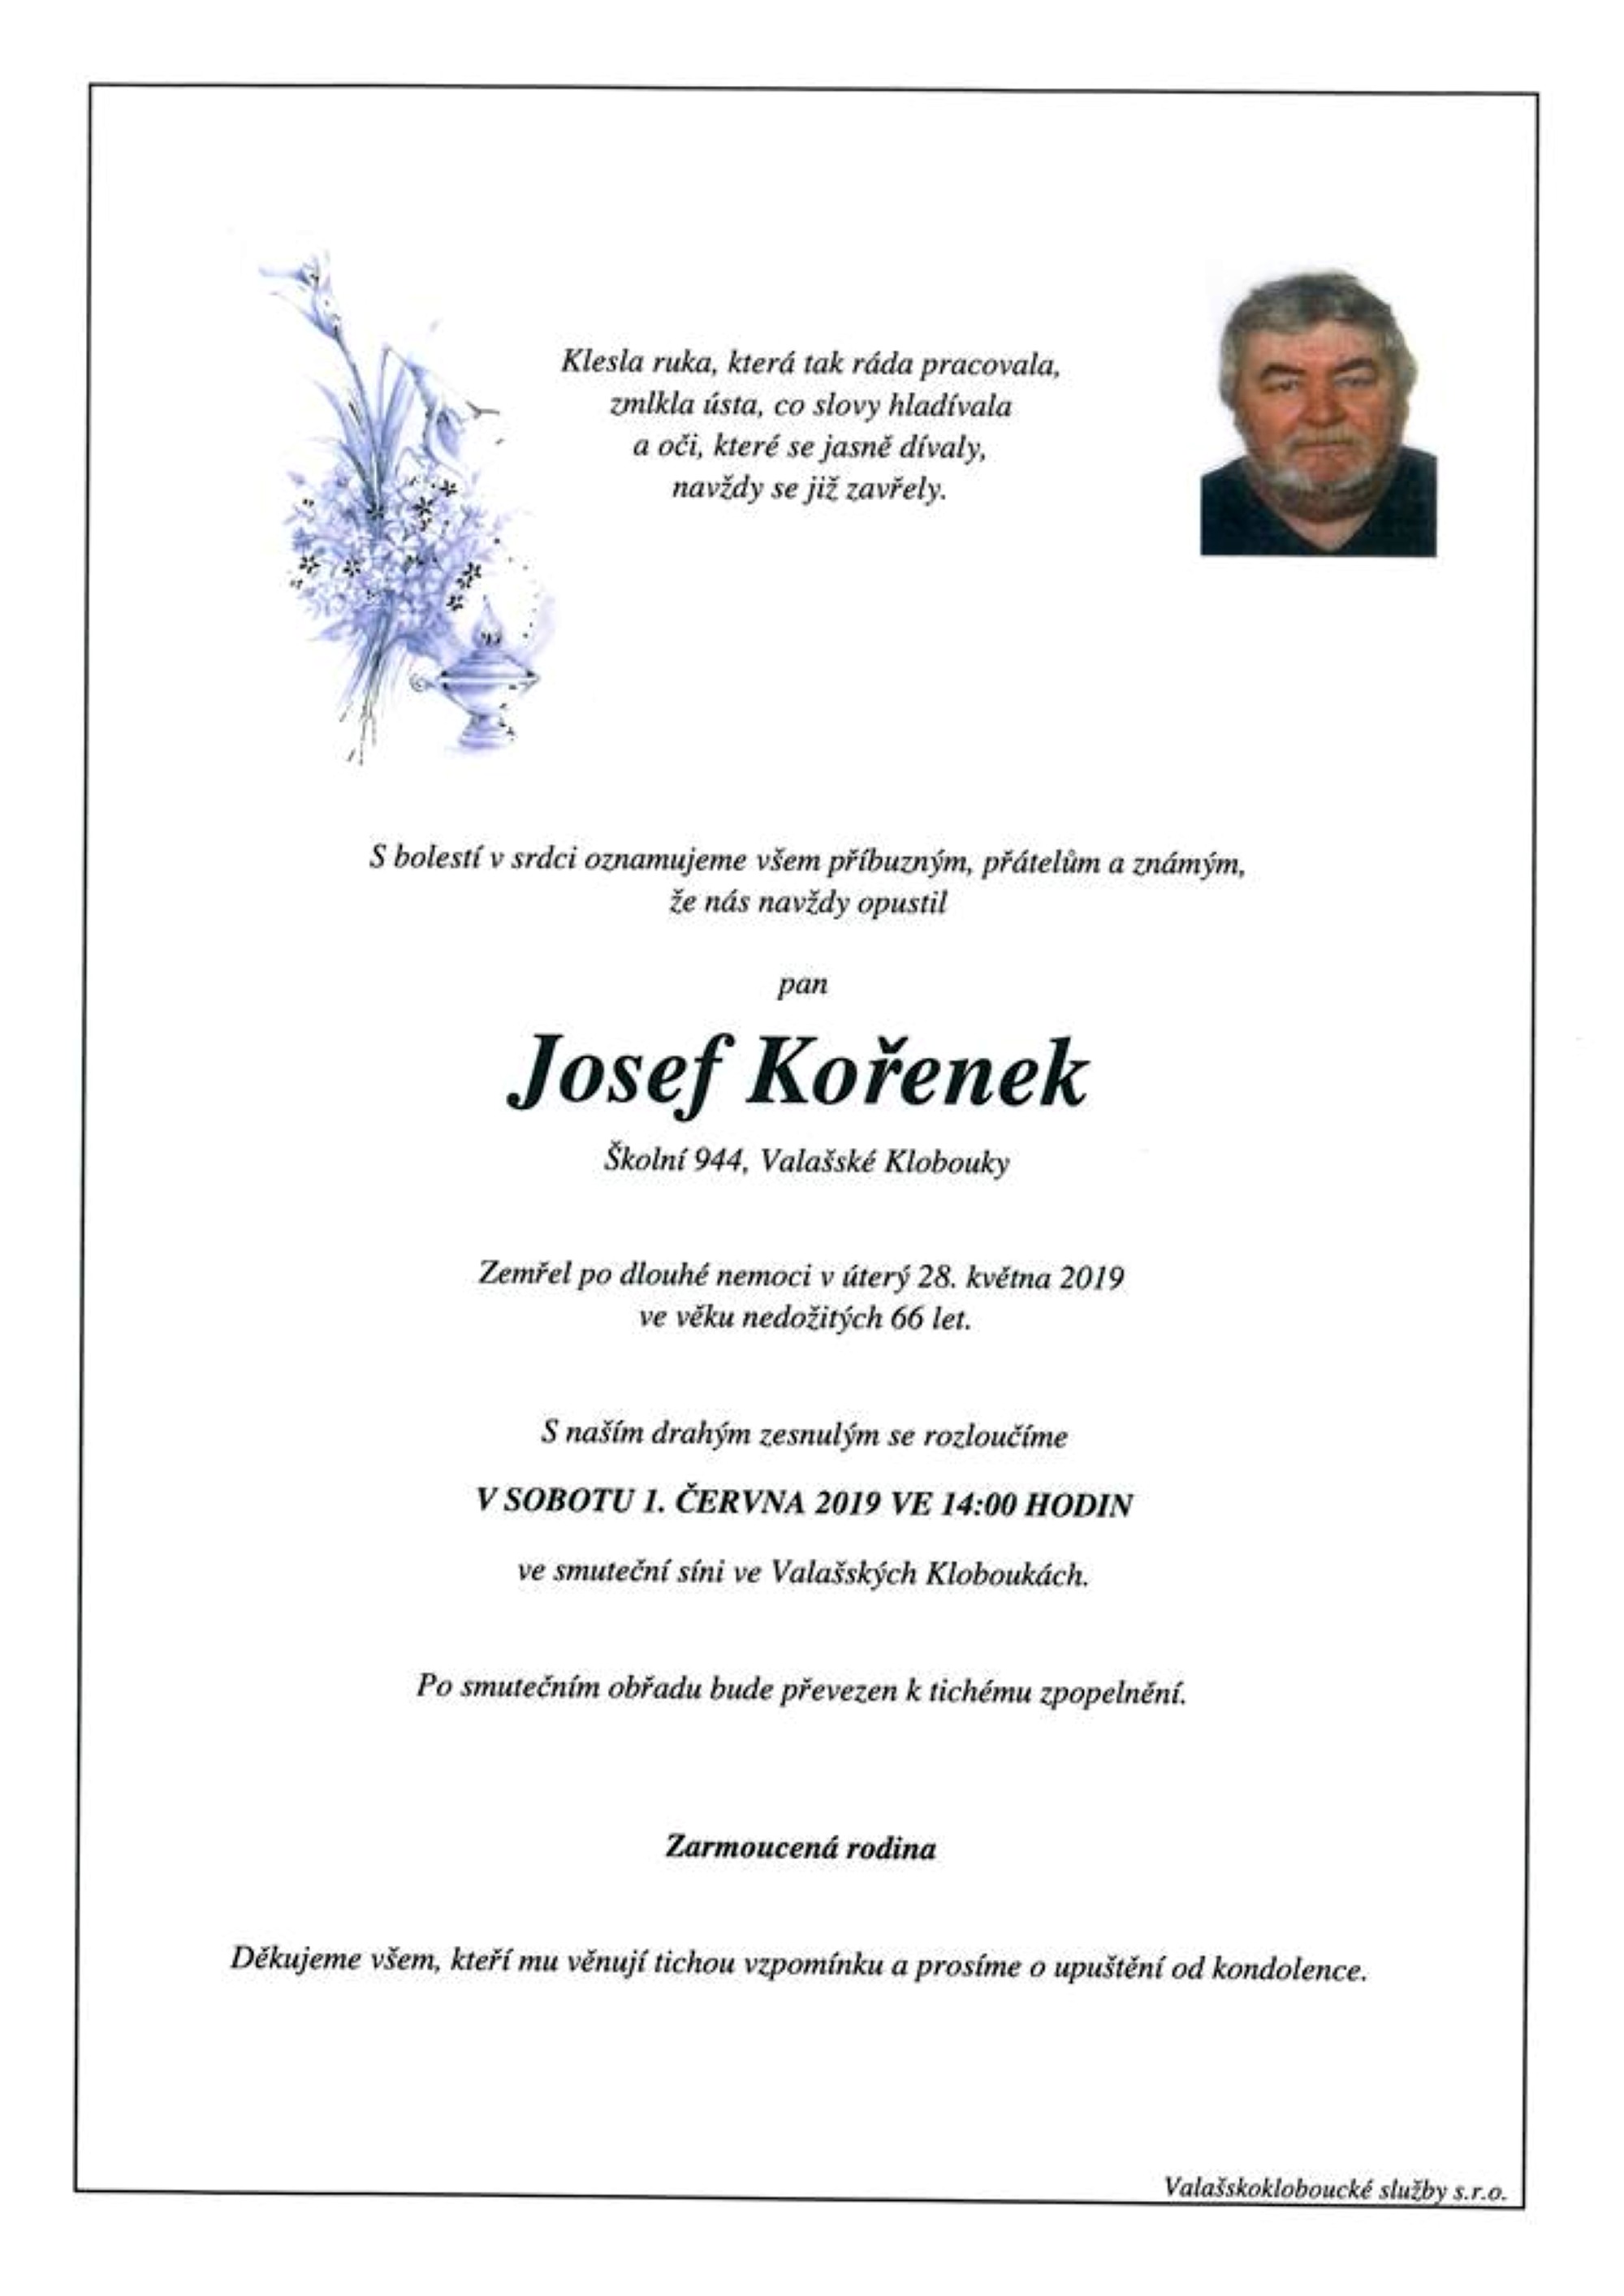 Josef Kořenek